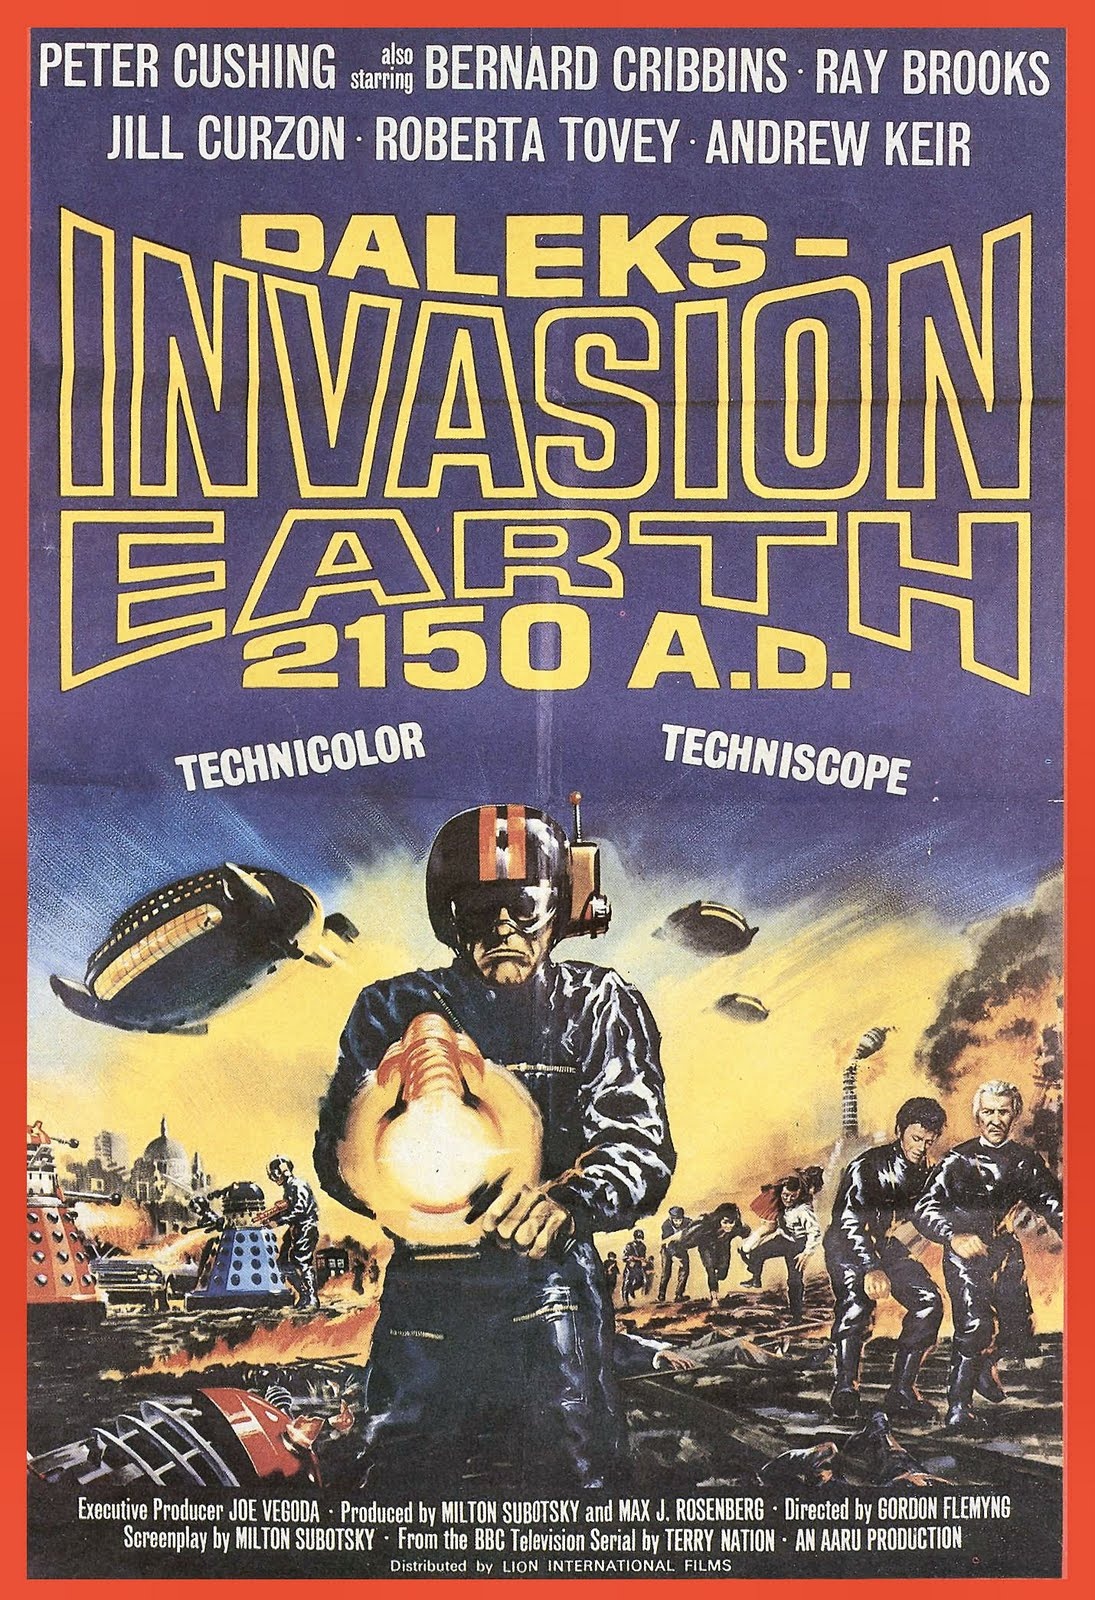 Daleks Invasion Earth 2150ad Poster 1966.jpg